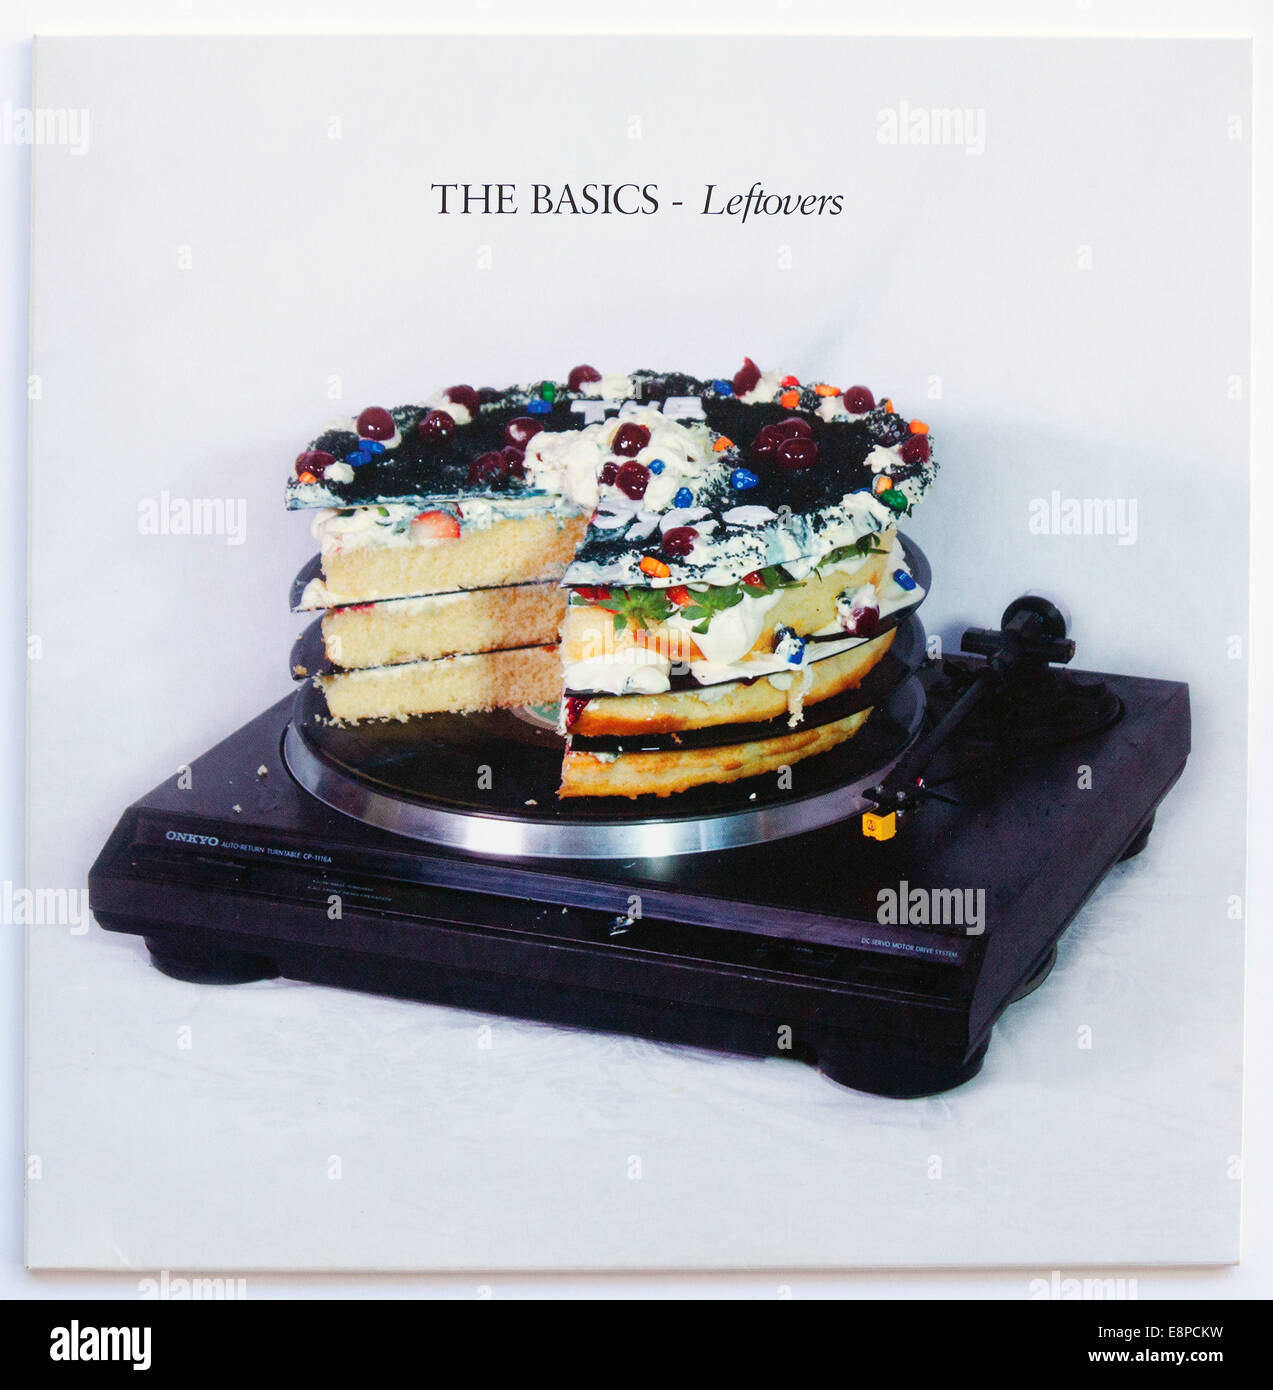 The Basics - Leftovers 2013 Vinyl Album Cover - Editorial Nur verwenden Stockfoto